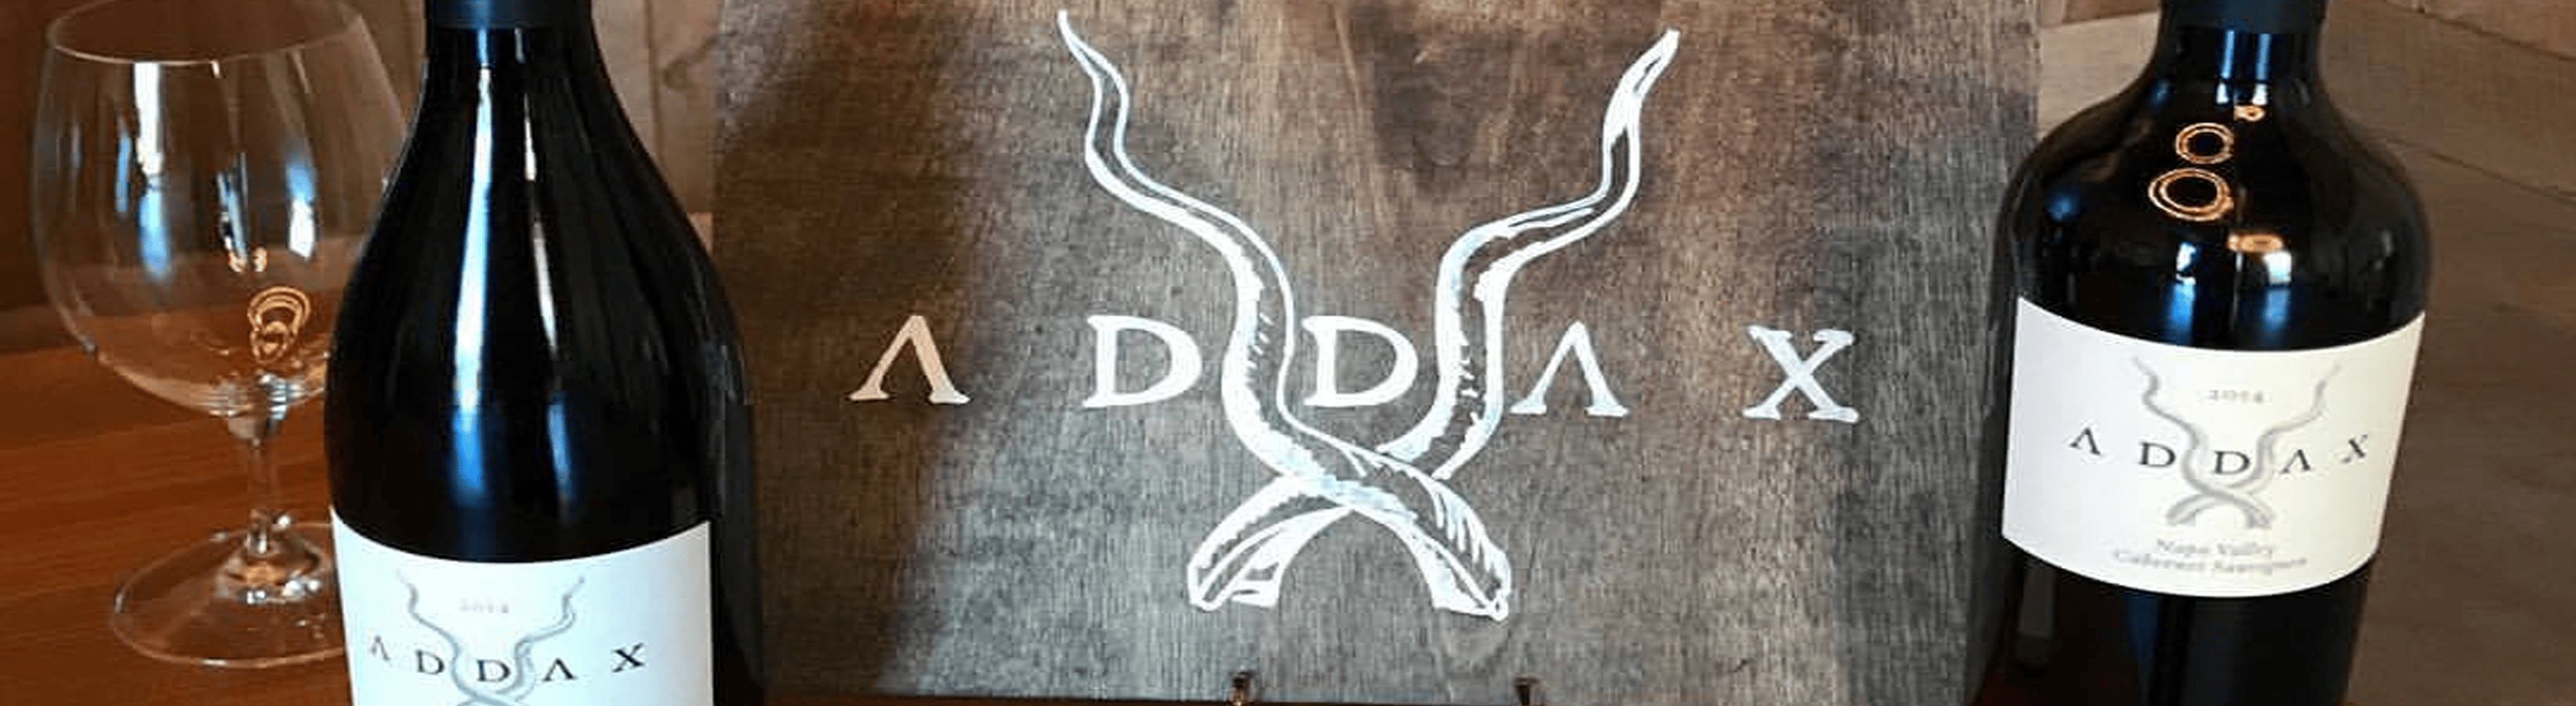 addax wine